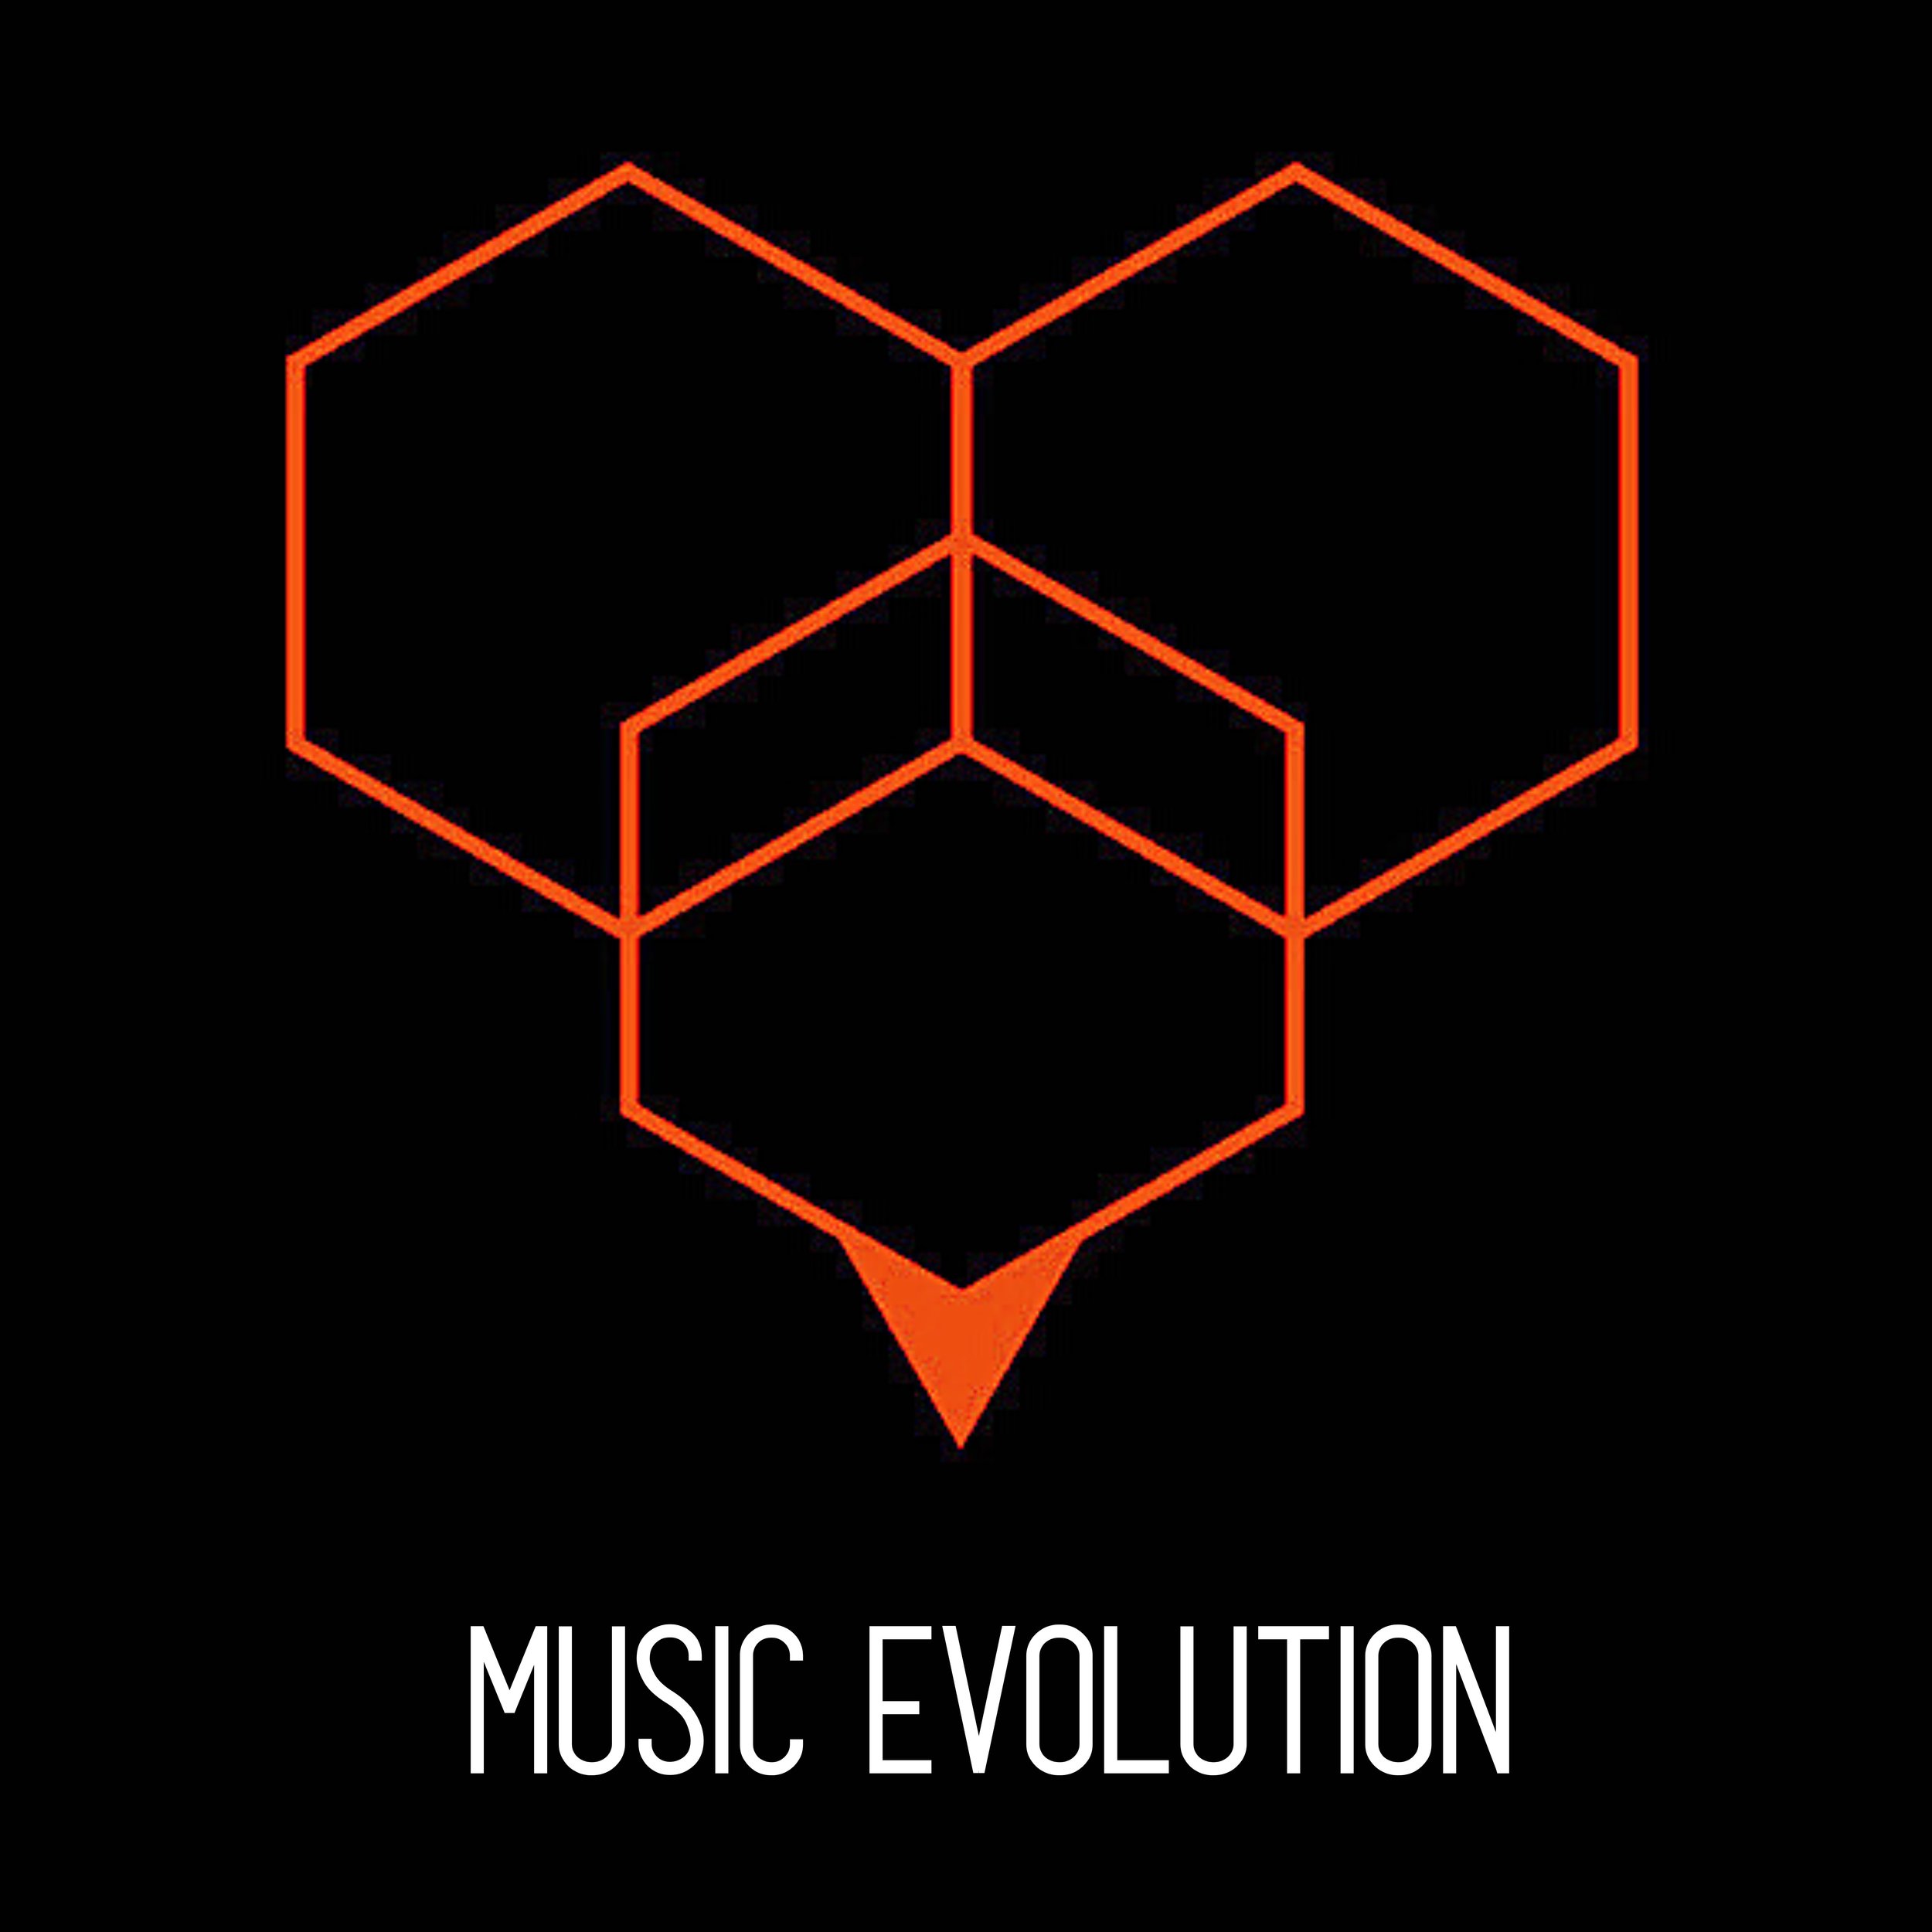 Music Evolution